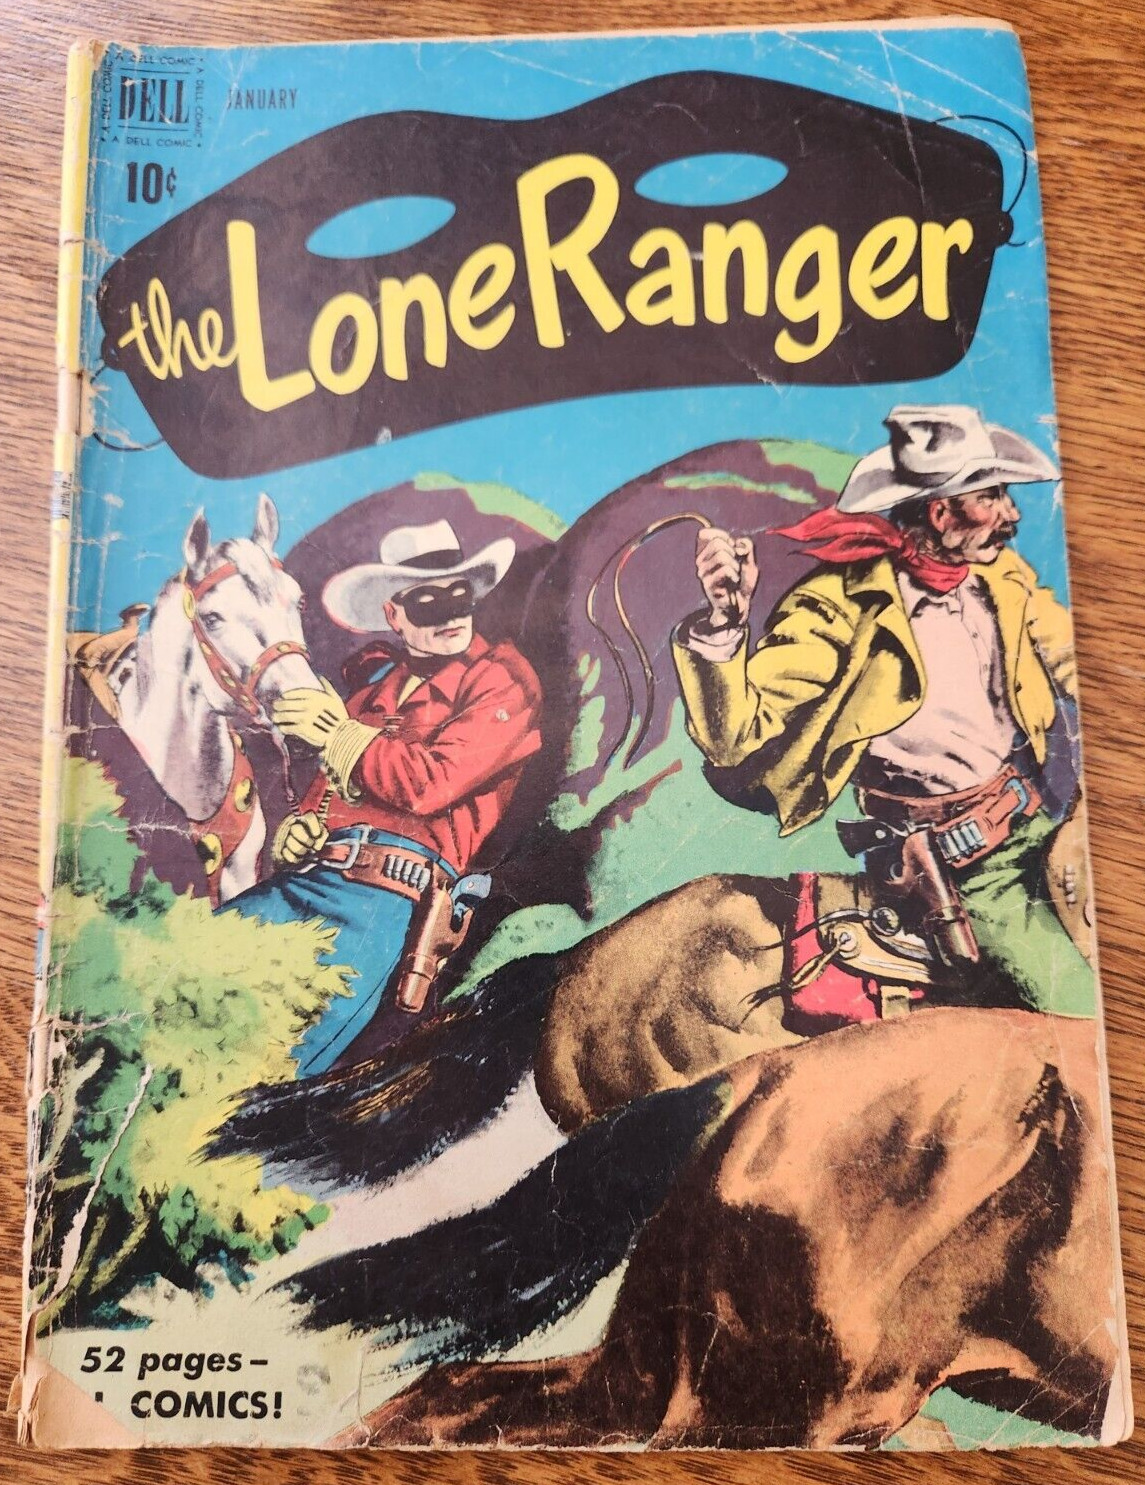 The Lone Ranger #31  Jan 1951  Golden Age Western